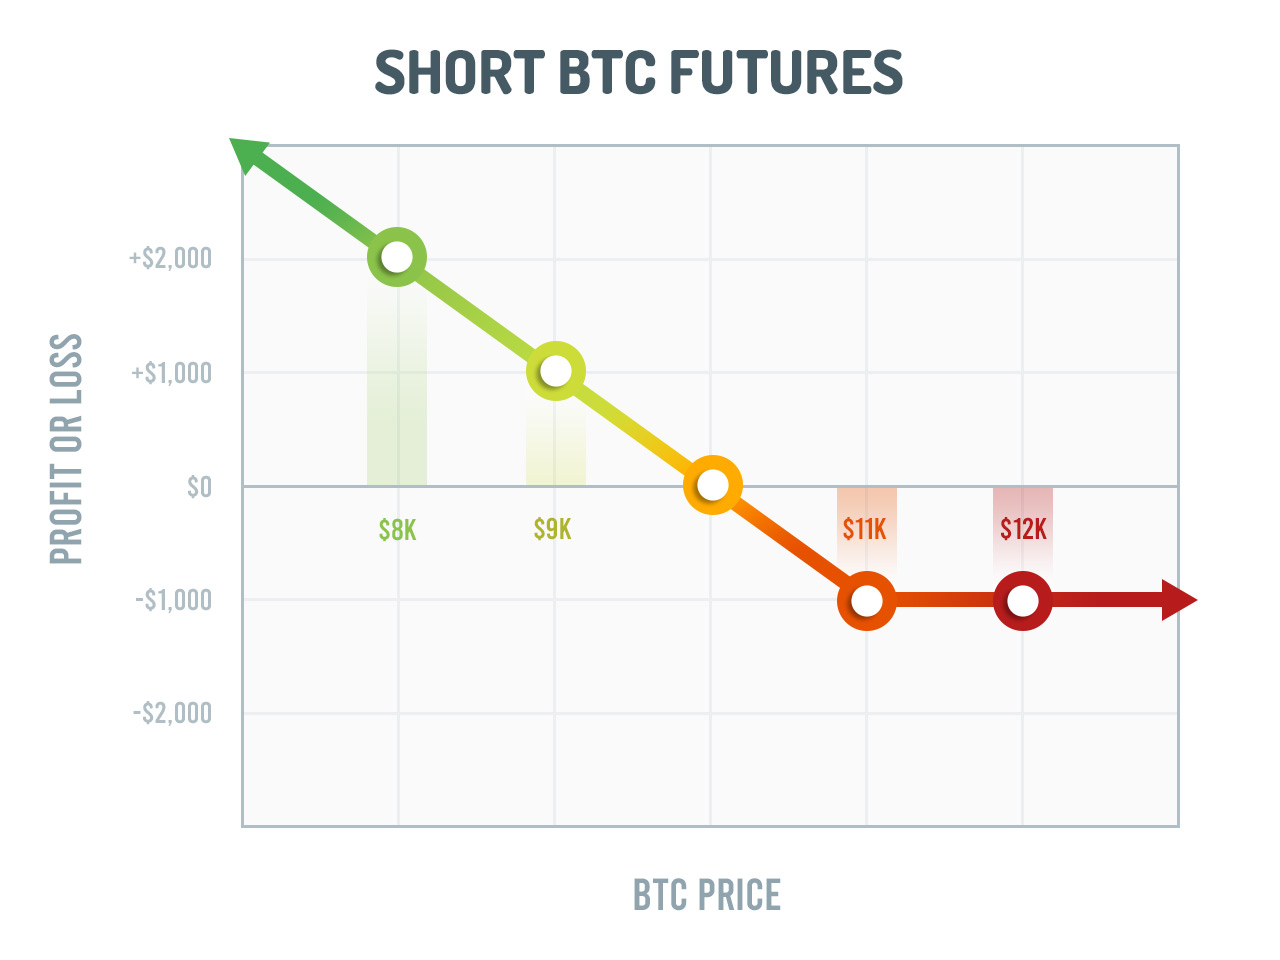 How to Short Bitcoin: Short Bitcoin Trading Guide - Bitcoinsensus